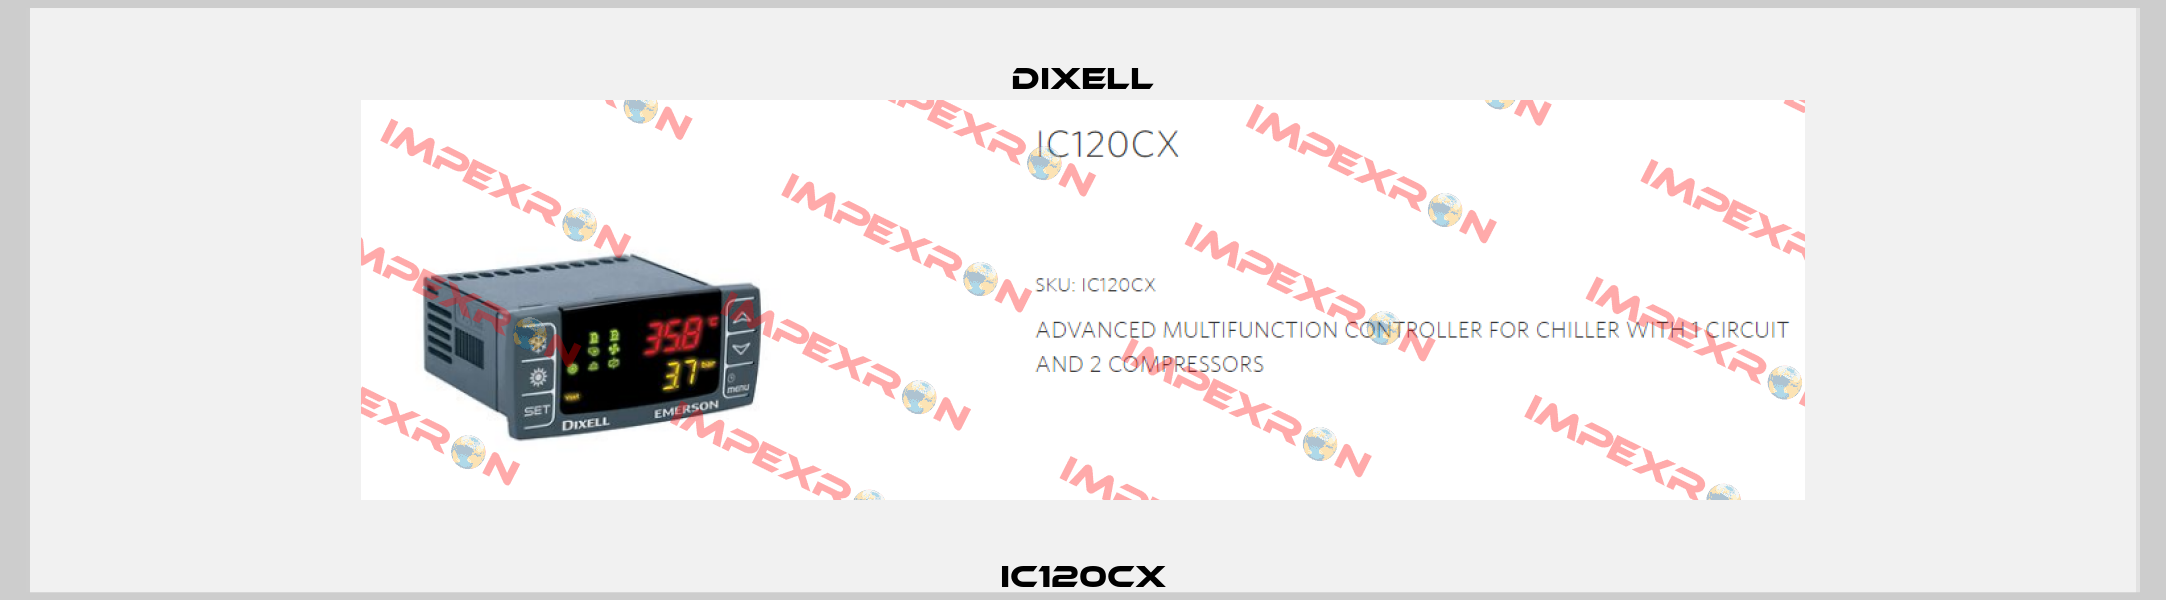 IC120CX Dixell